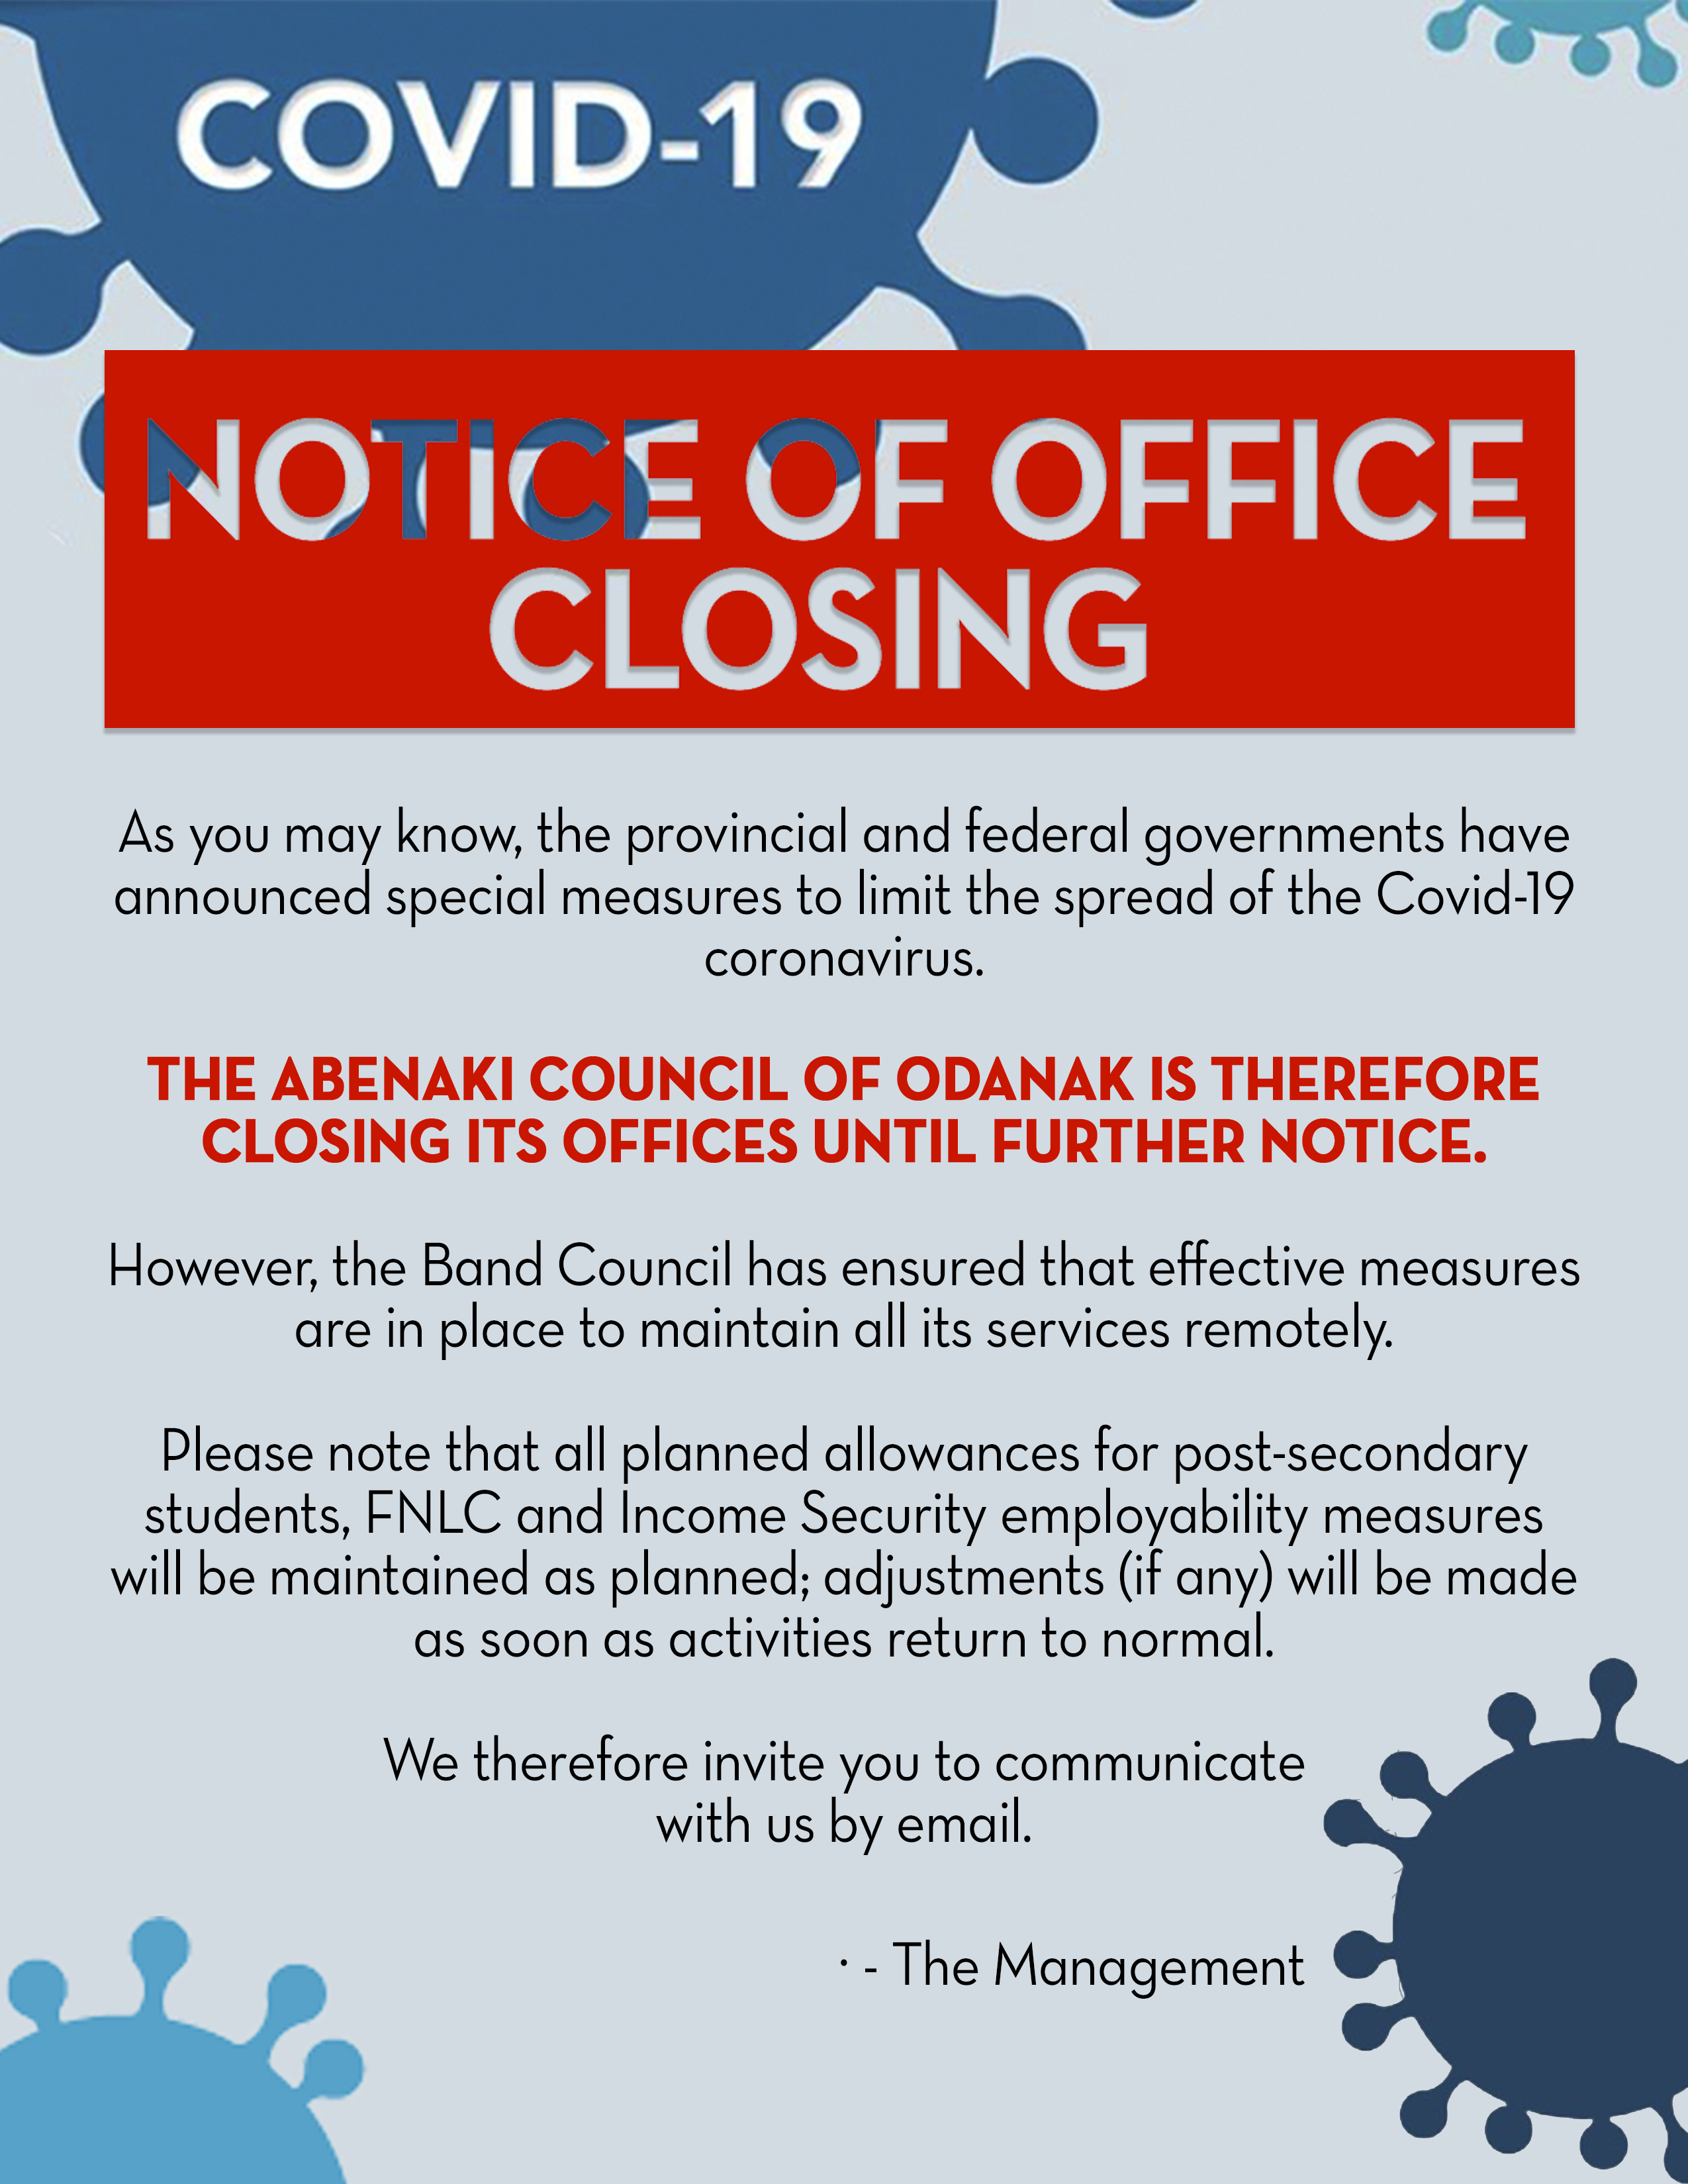 NOTICE OF OFFICE CLOSING - Conseil des Abénakis d'Odanak